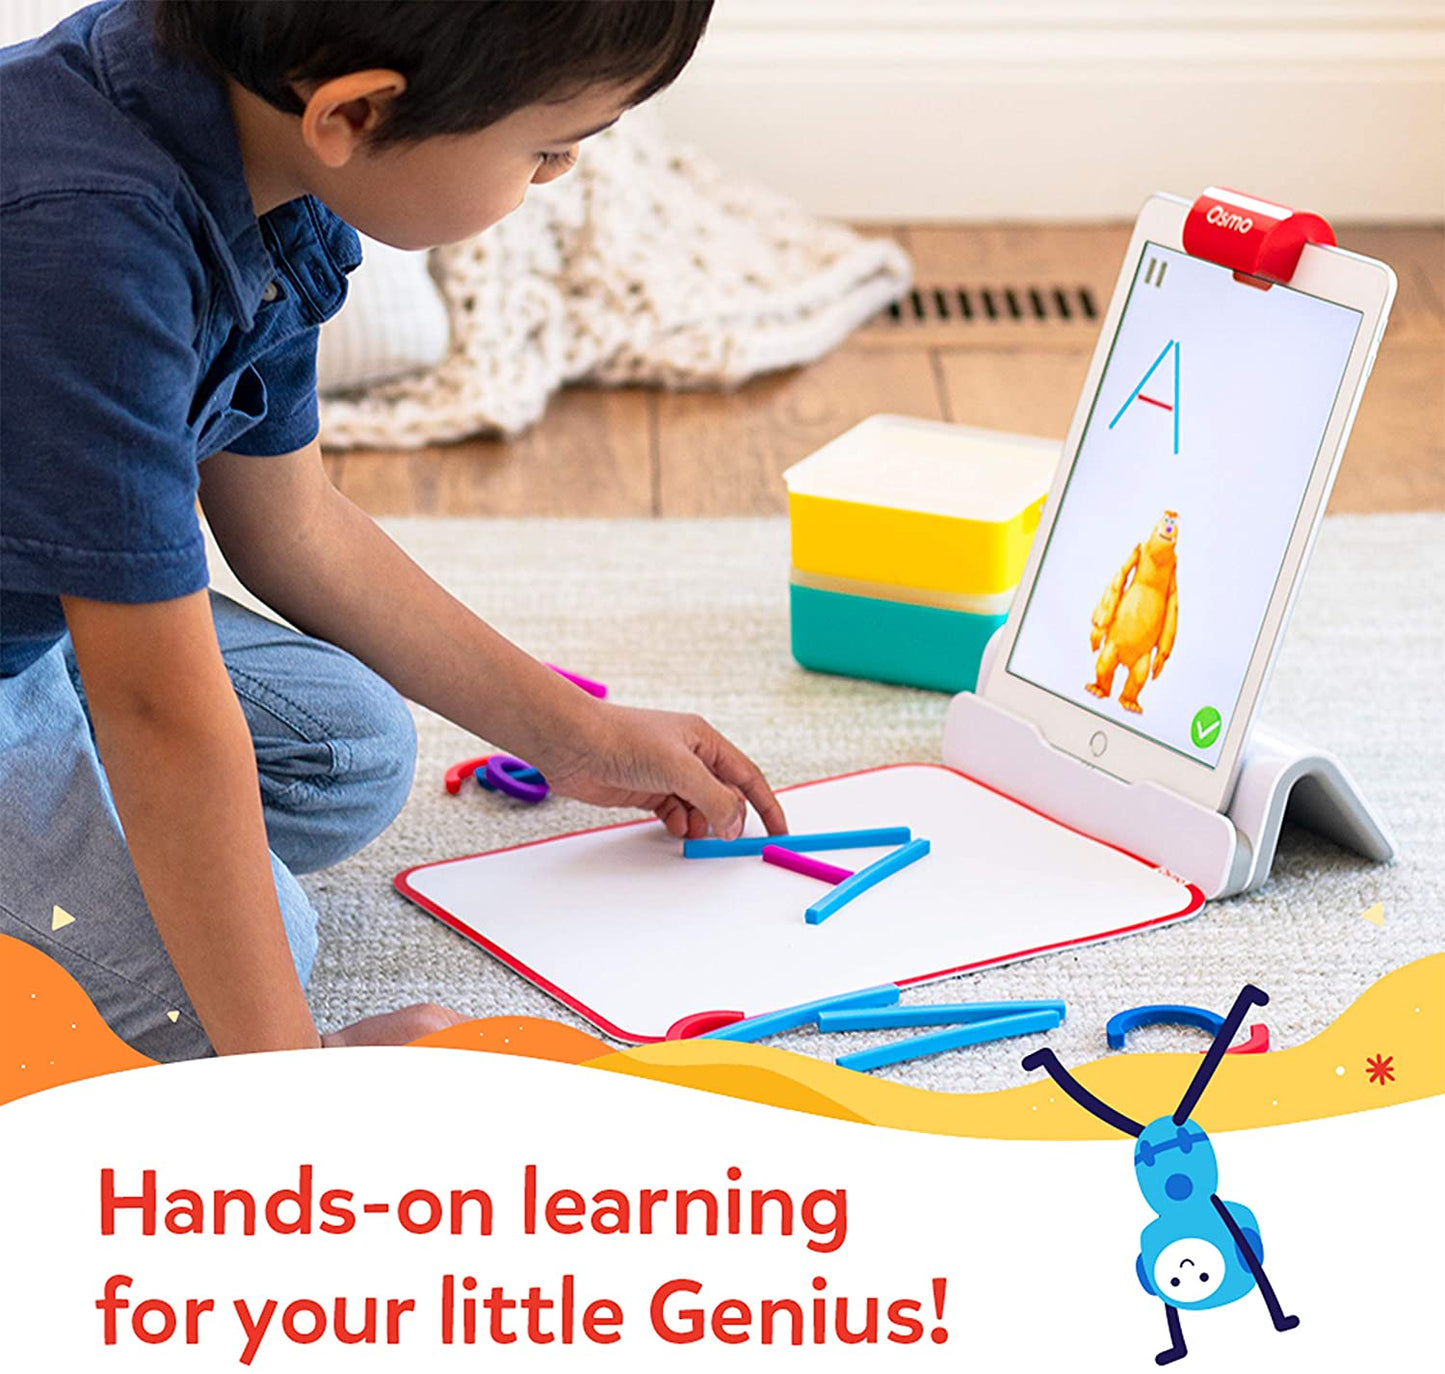 OSMO Little Genius Starter Kit for iPad